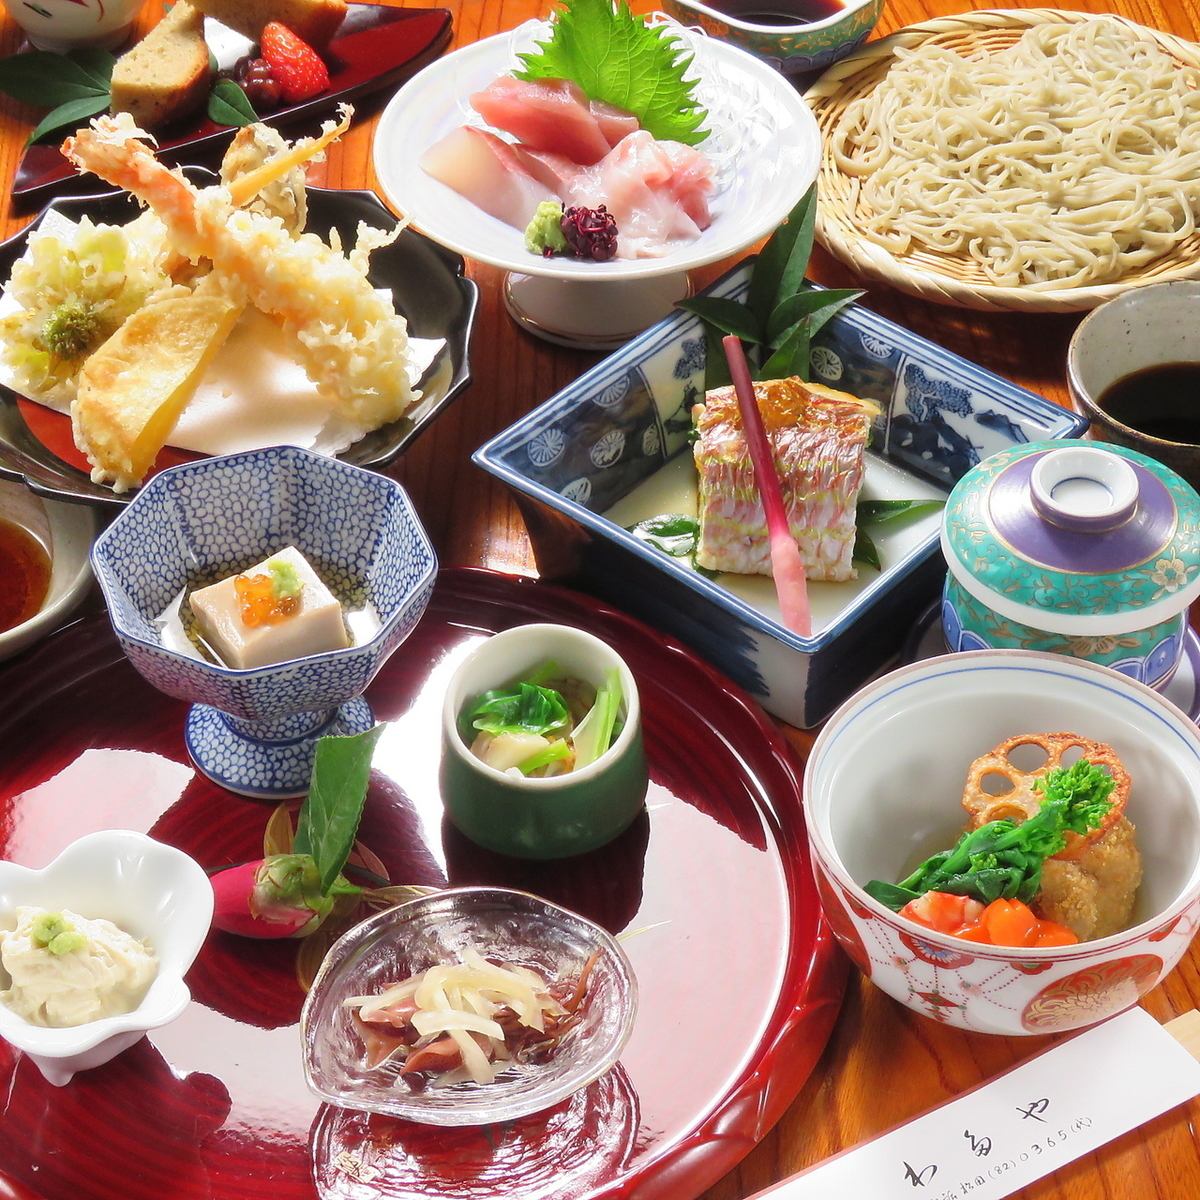 We offer kaiseki cuisine using seasonal ingredients prepared by skilled chefs. Lunch is reasonably priced!